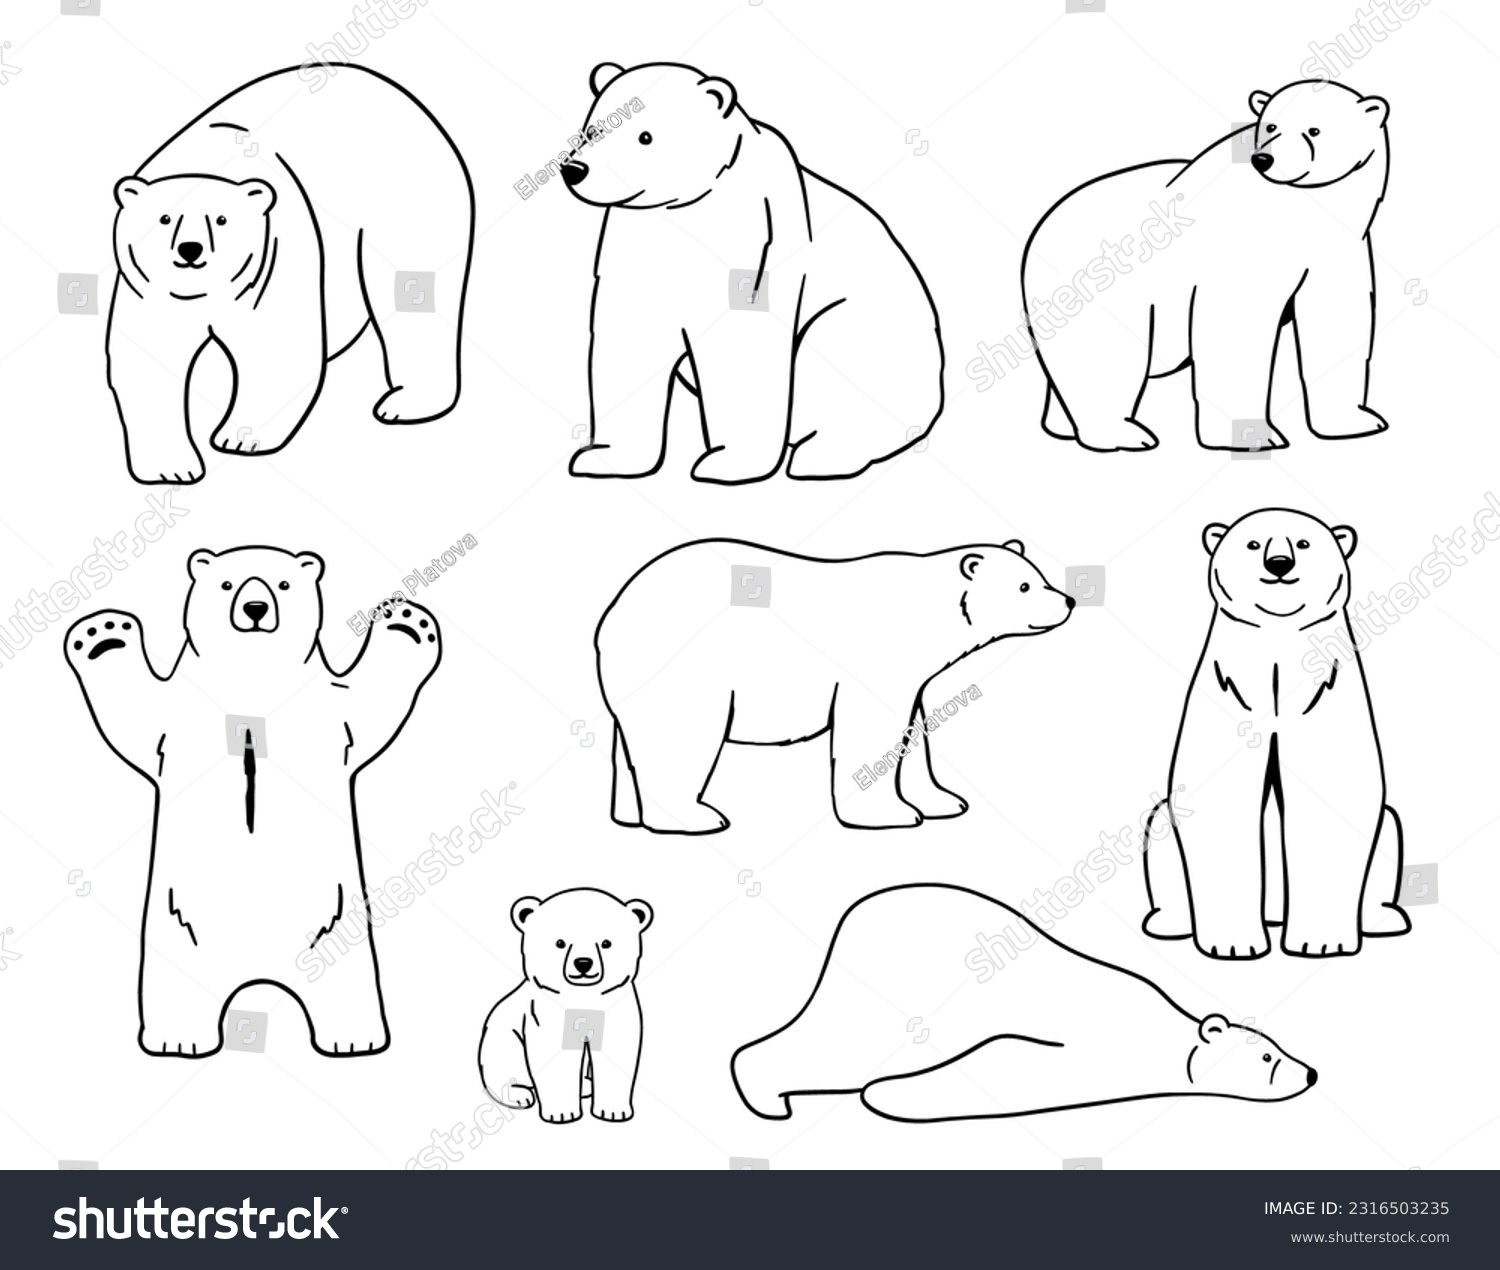 SVG of White polar bear stands on paws, lying. Baby White polar bear line sketch set. Outline vector illustration of forest animal. svg